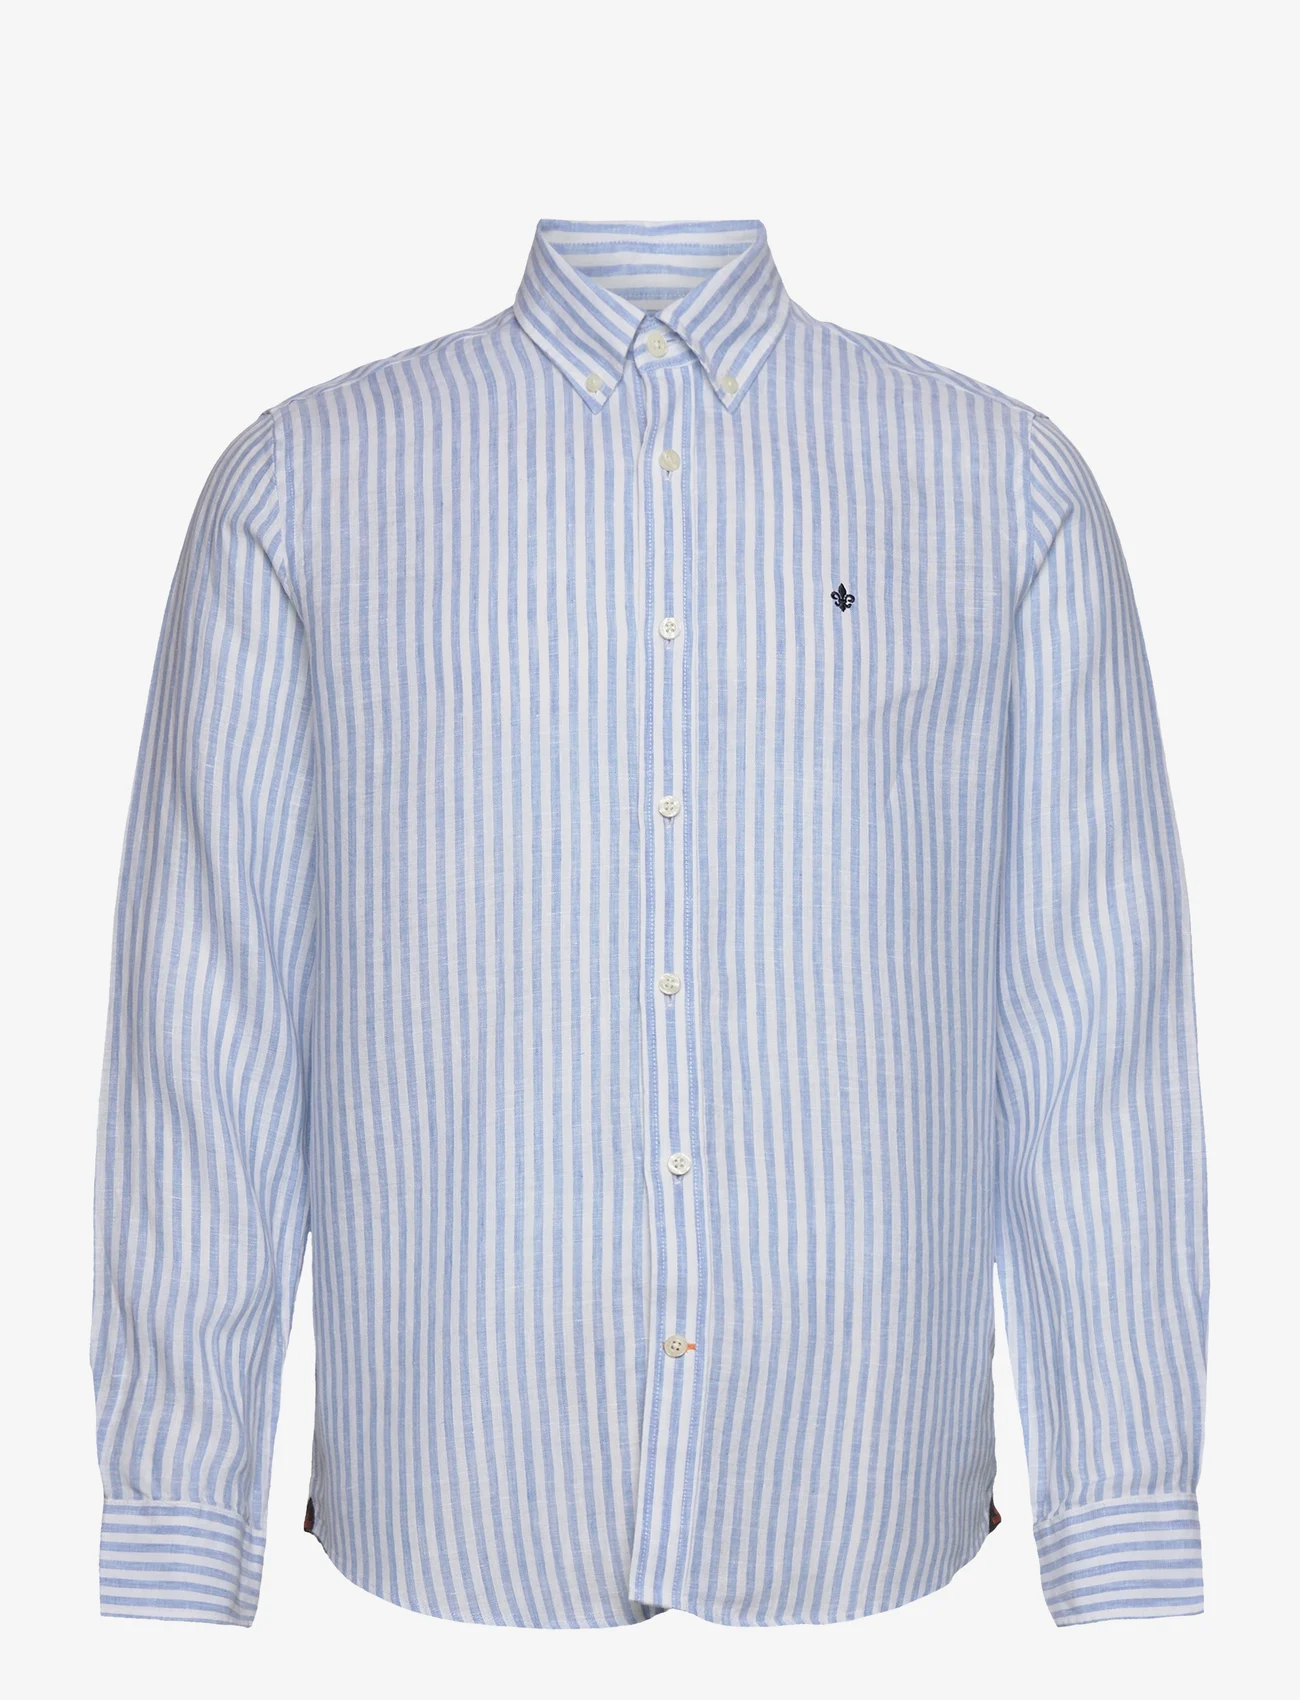 Morris - Douglas Linen Stripe BD Shirt - leinenhemden - blue - 0